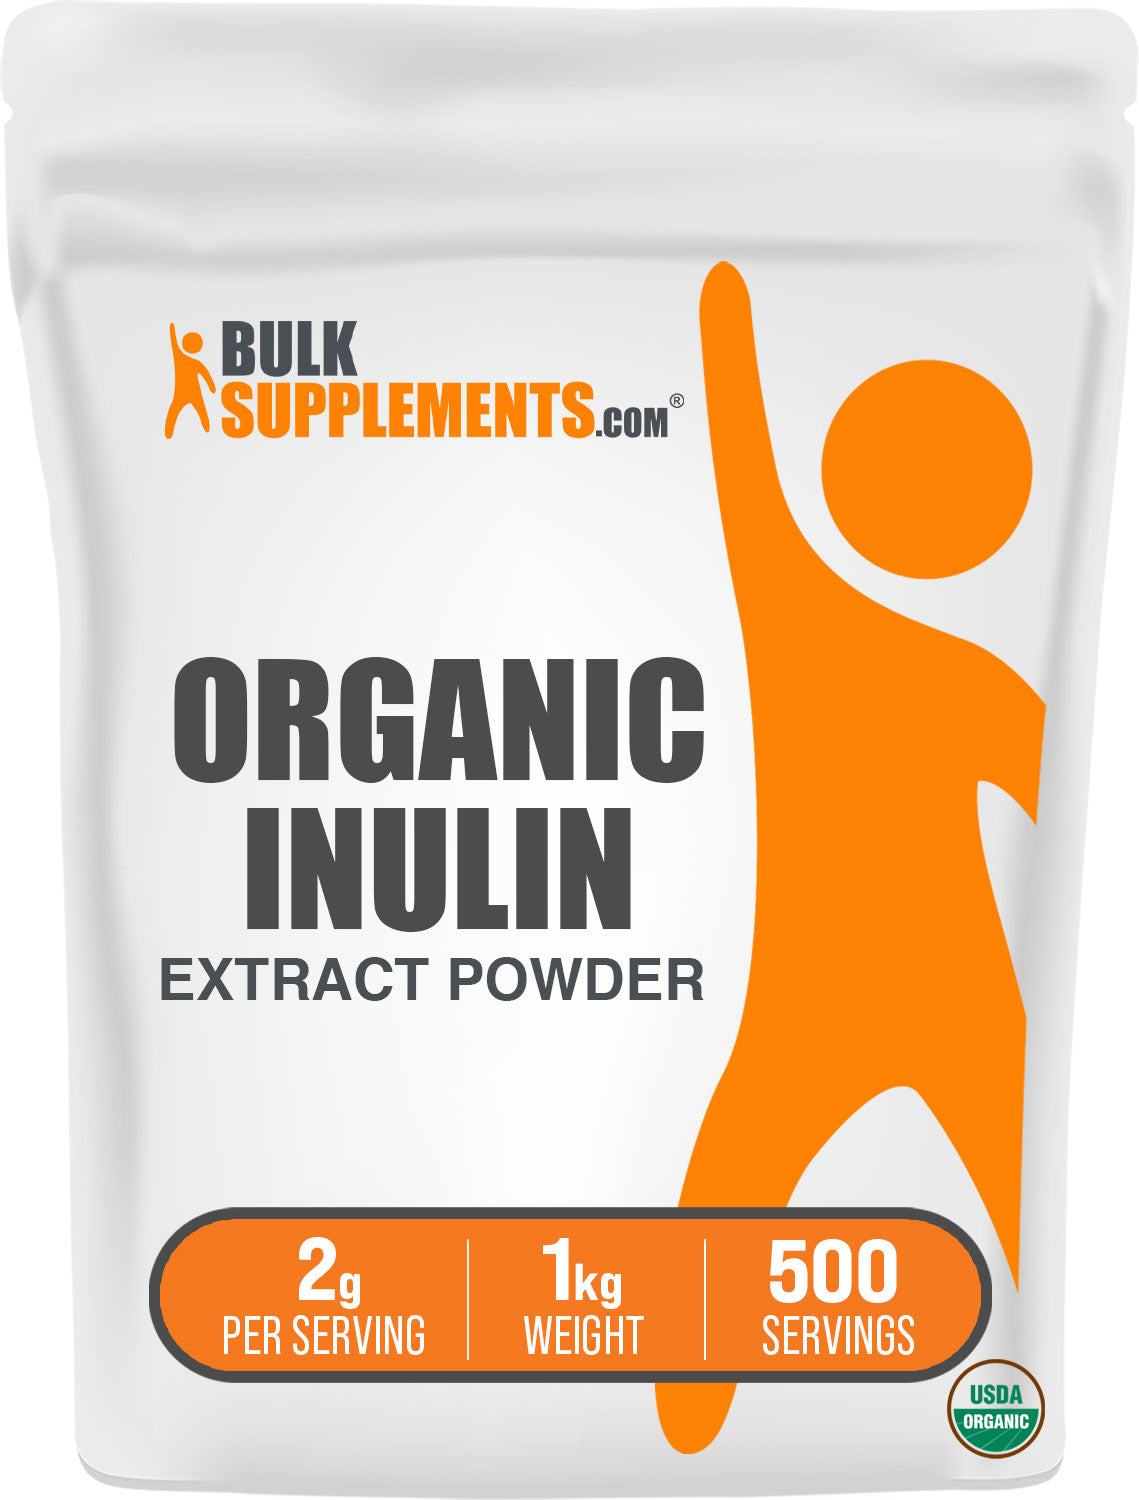 BulkSupplements Organic Inulin Extract Powder 1kg bag